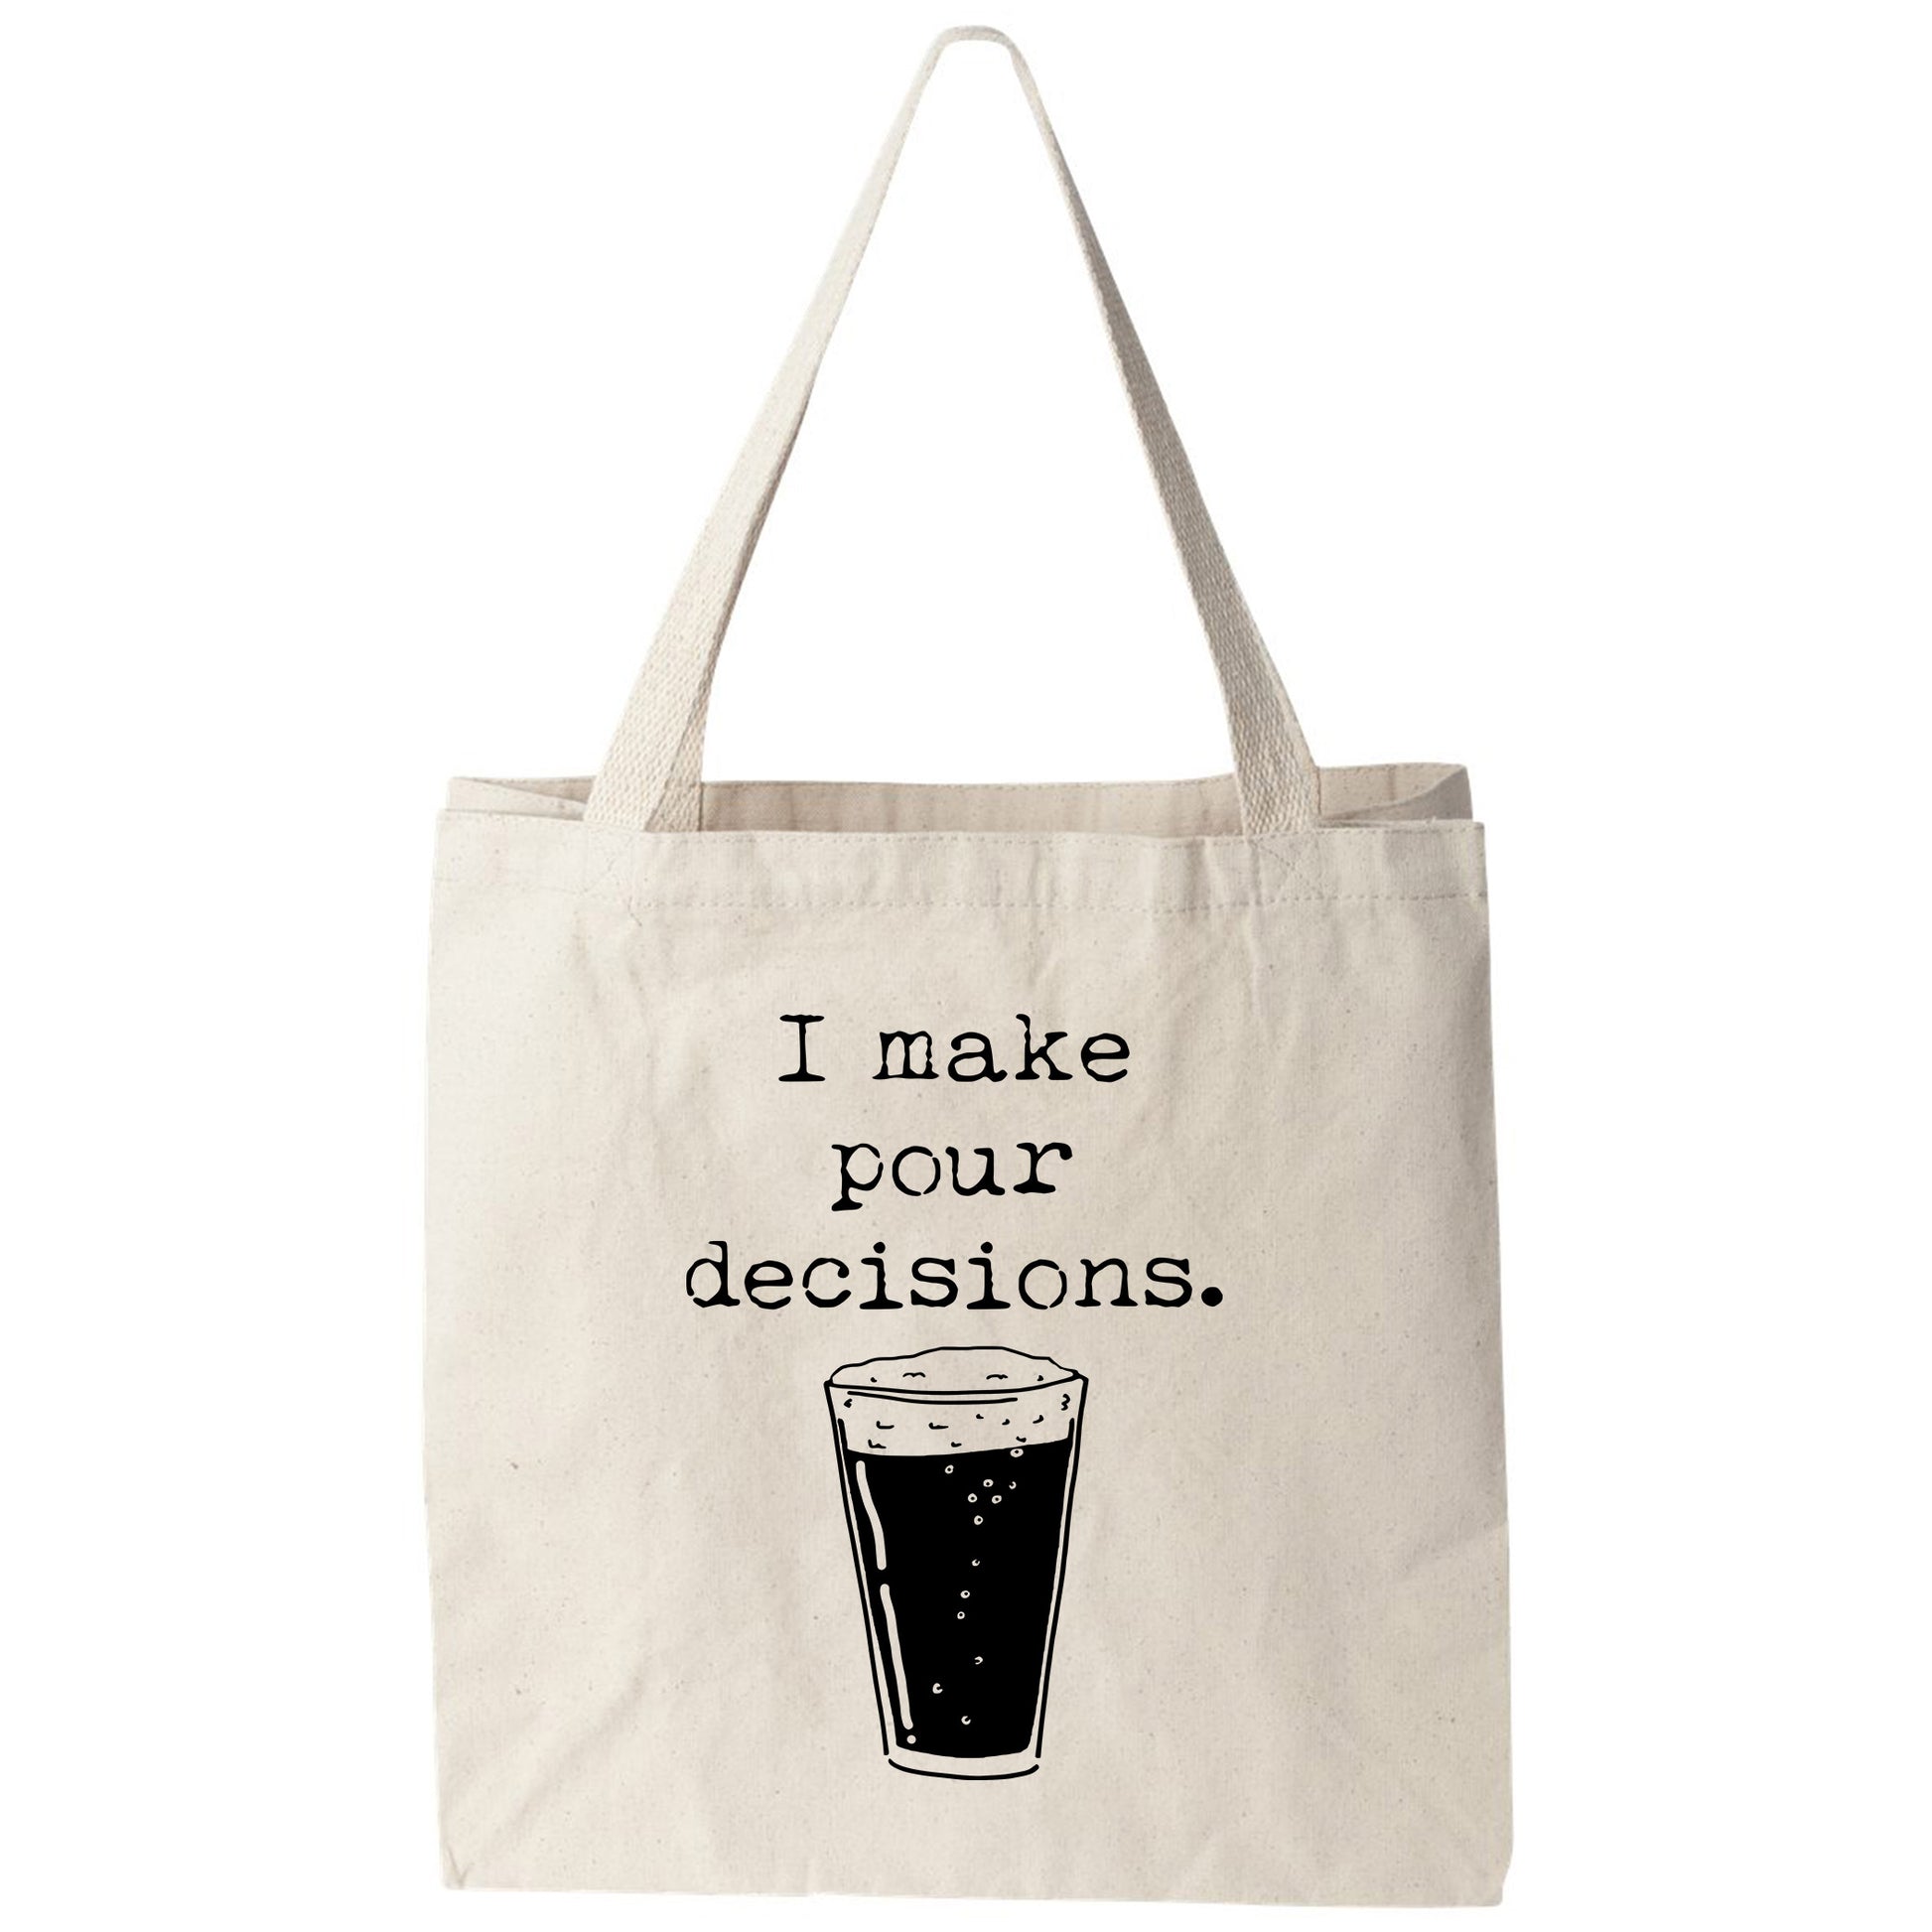 a tote bag that says i make four decision